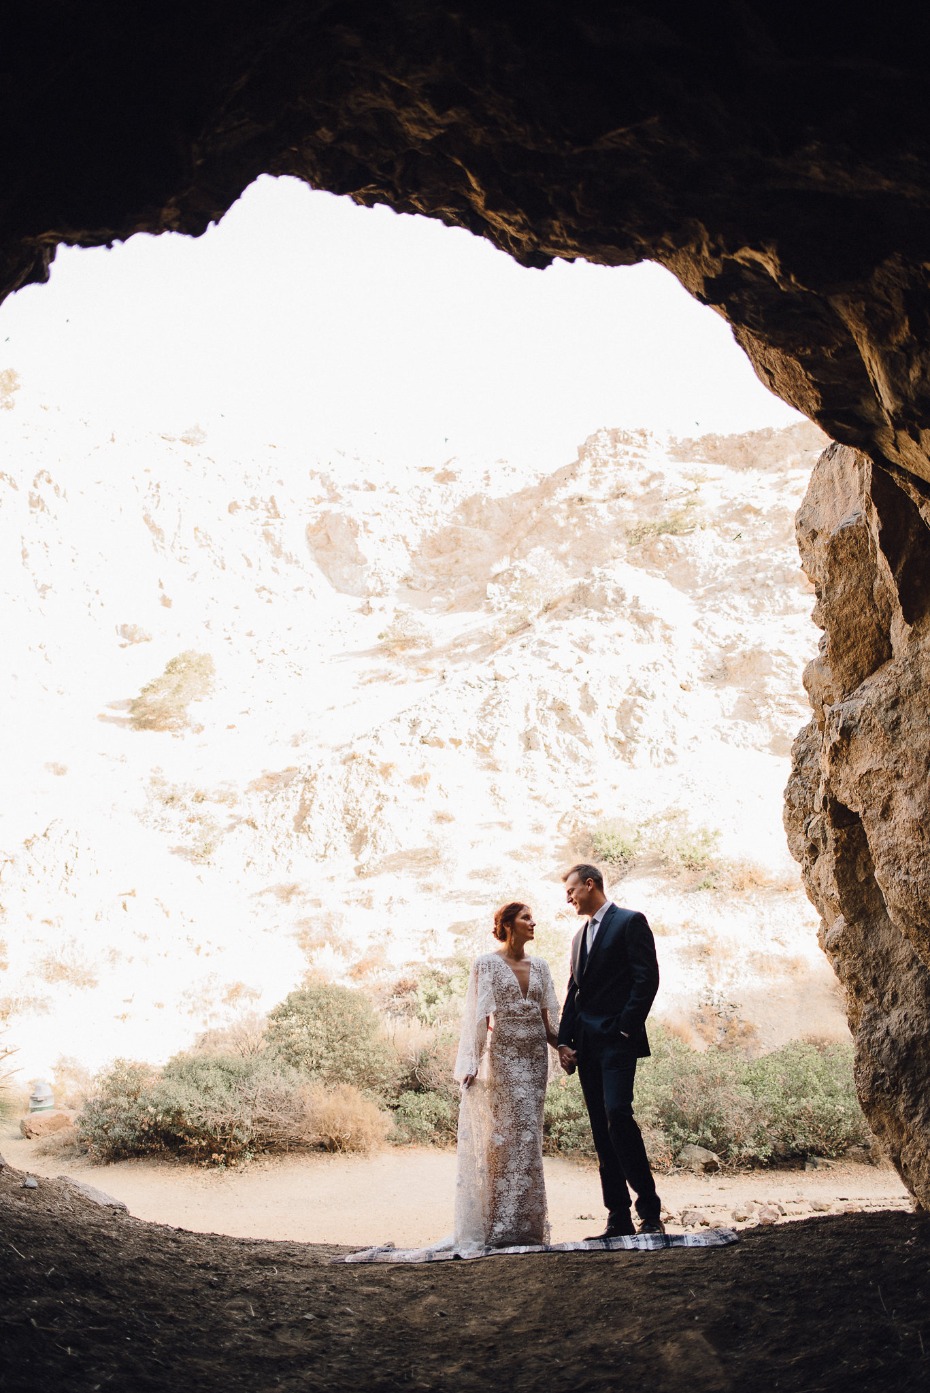 The Bronson Canyon Caves bohemian wedding ideas